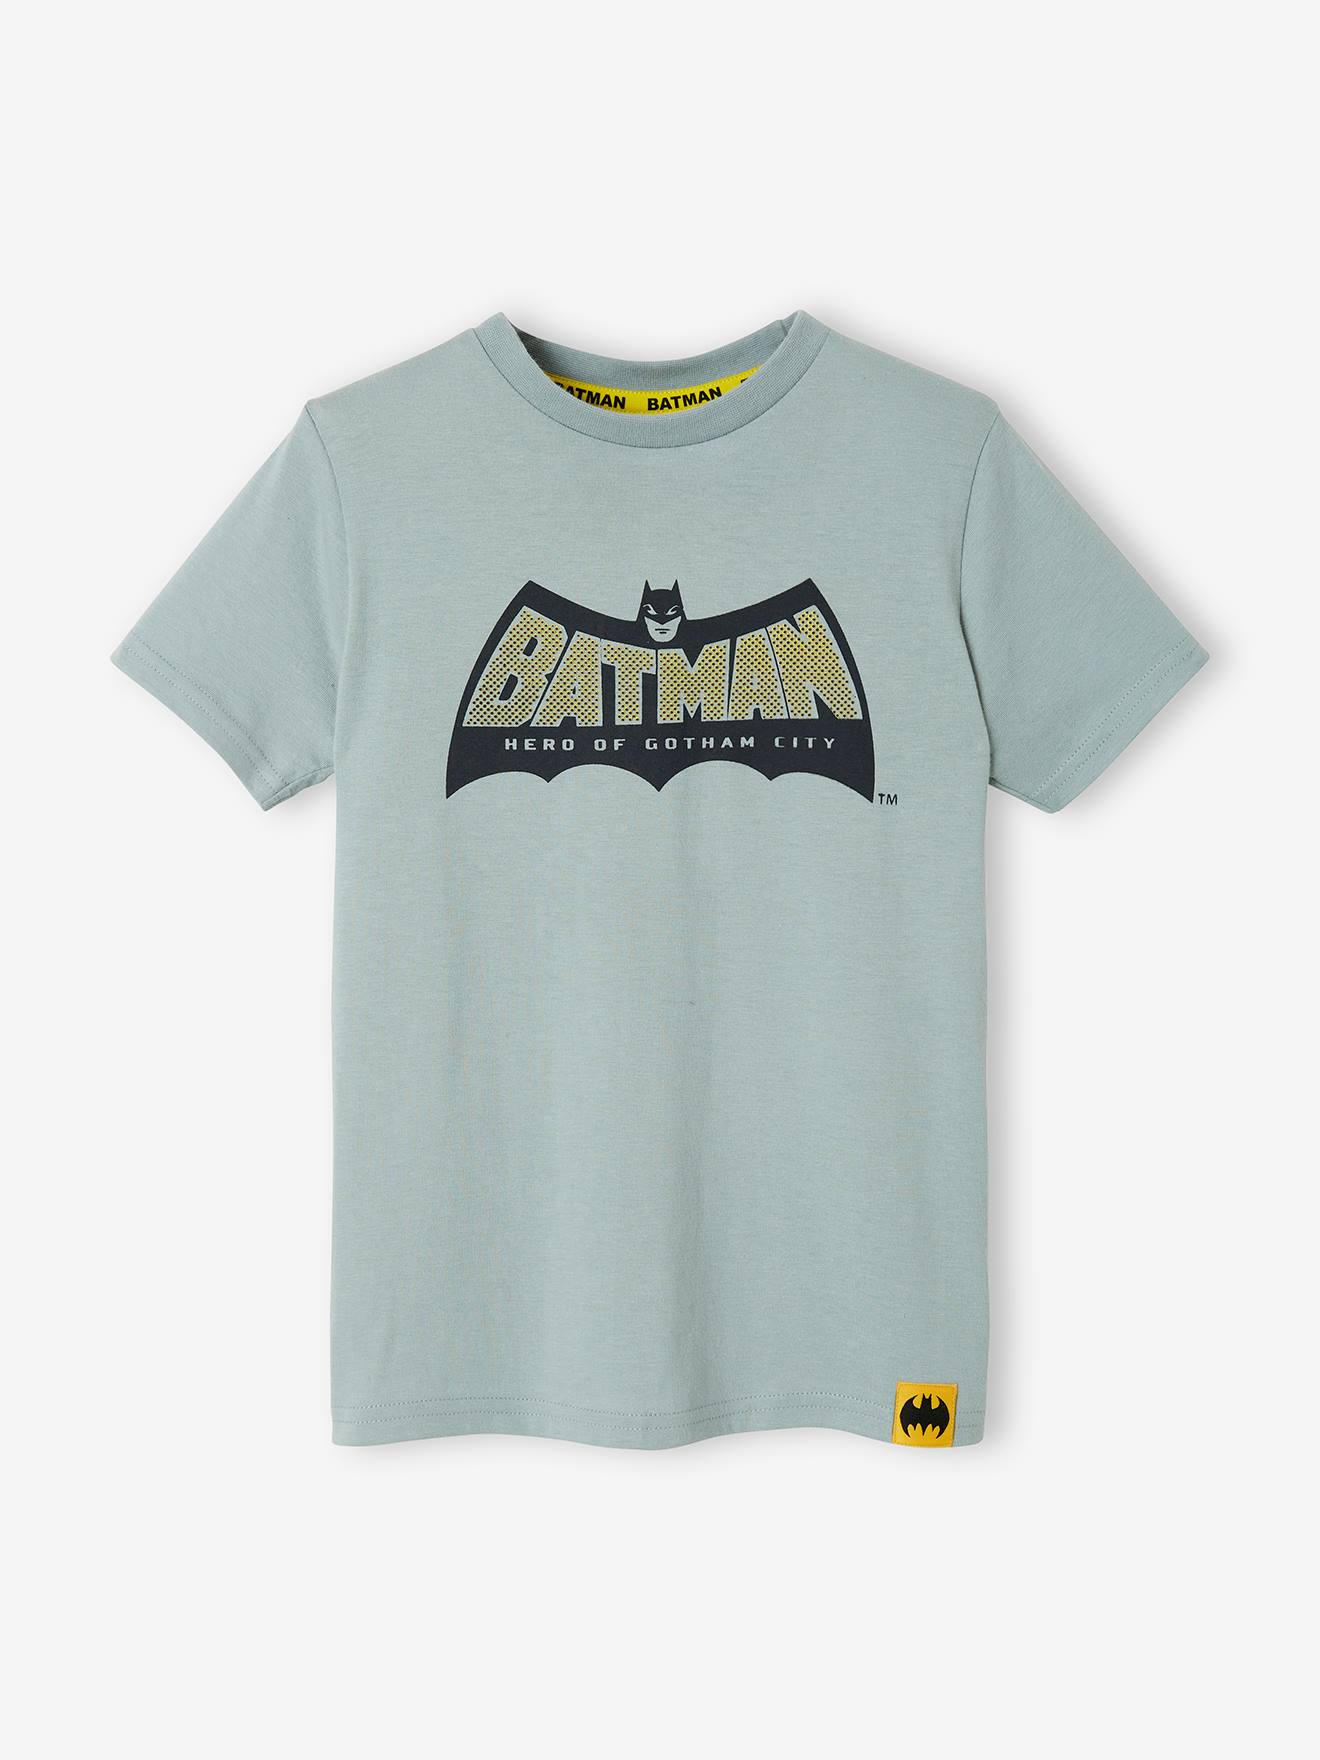 DC Comics(r) Batman T-Shirt for Boys grey medium solid with design